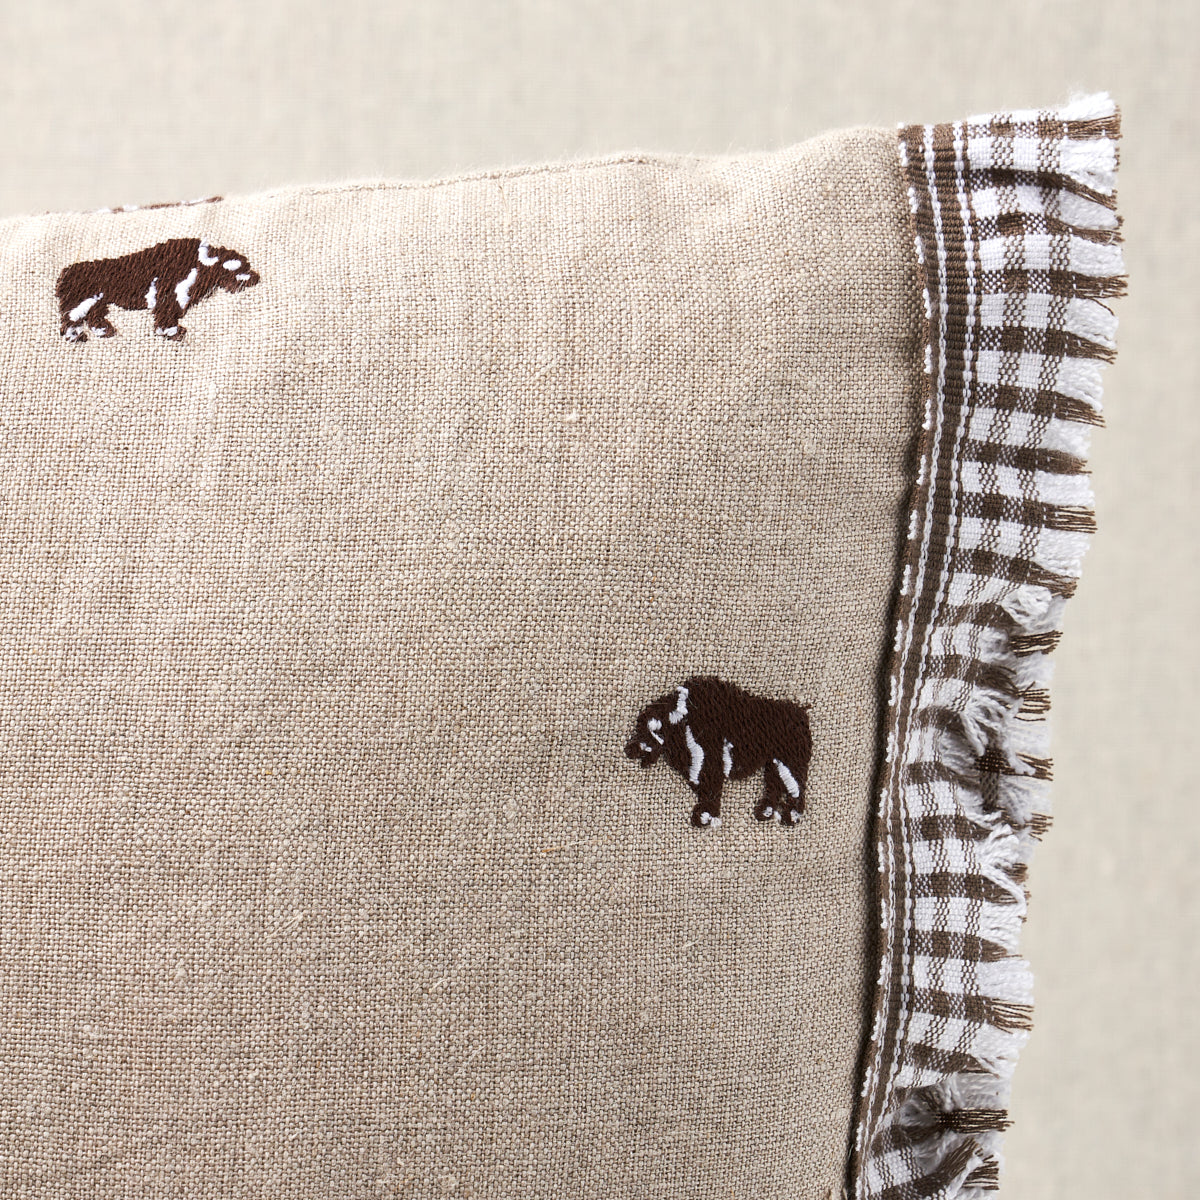 Buffalo Embroidery Pillow | Natural